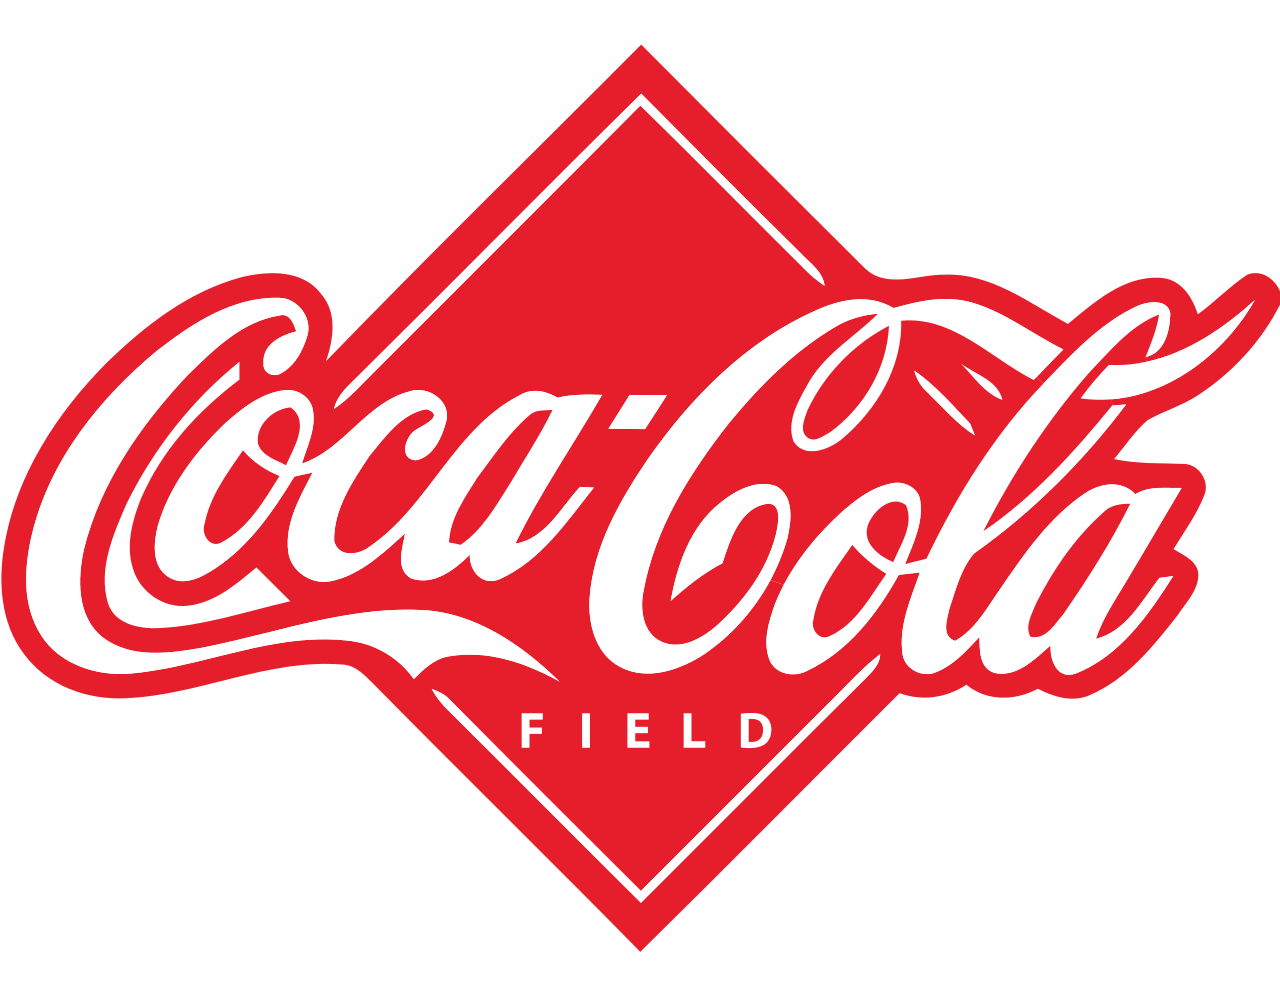 Coca-Cola Logo - Coca Cola logo PNG images free download